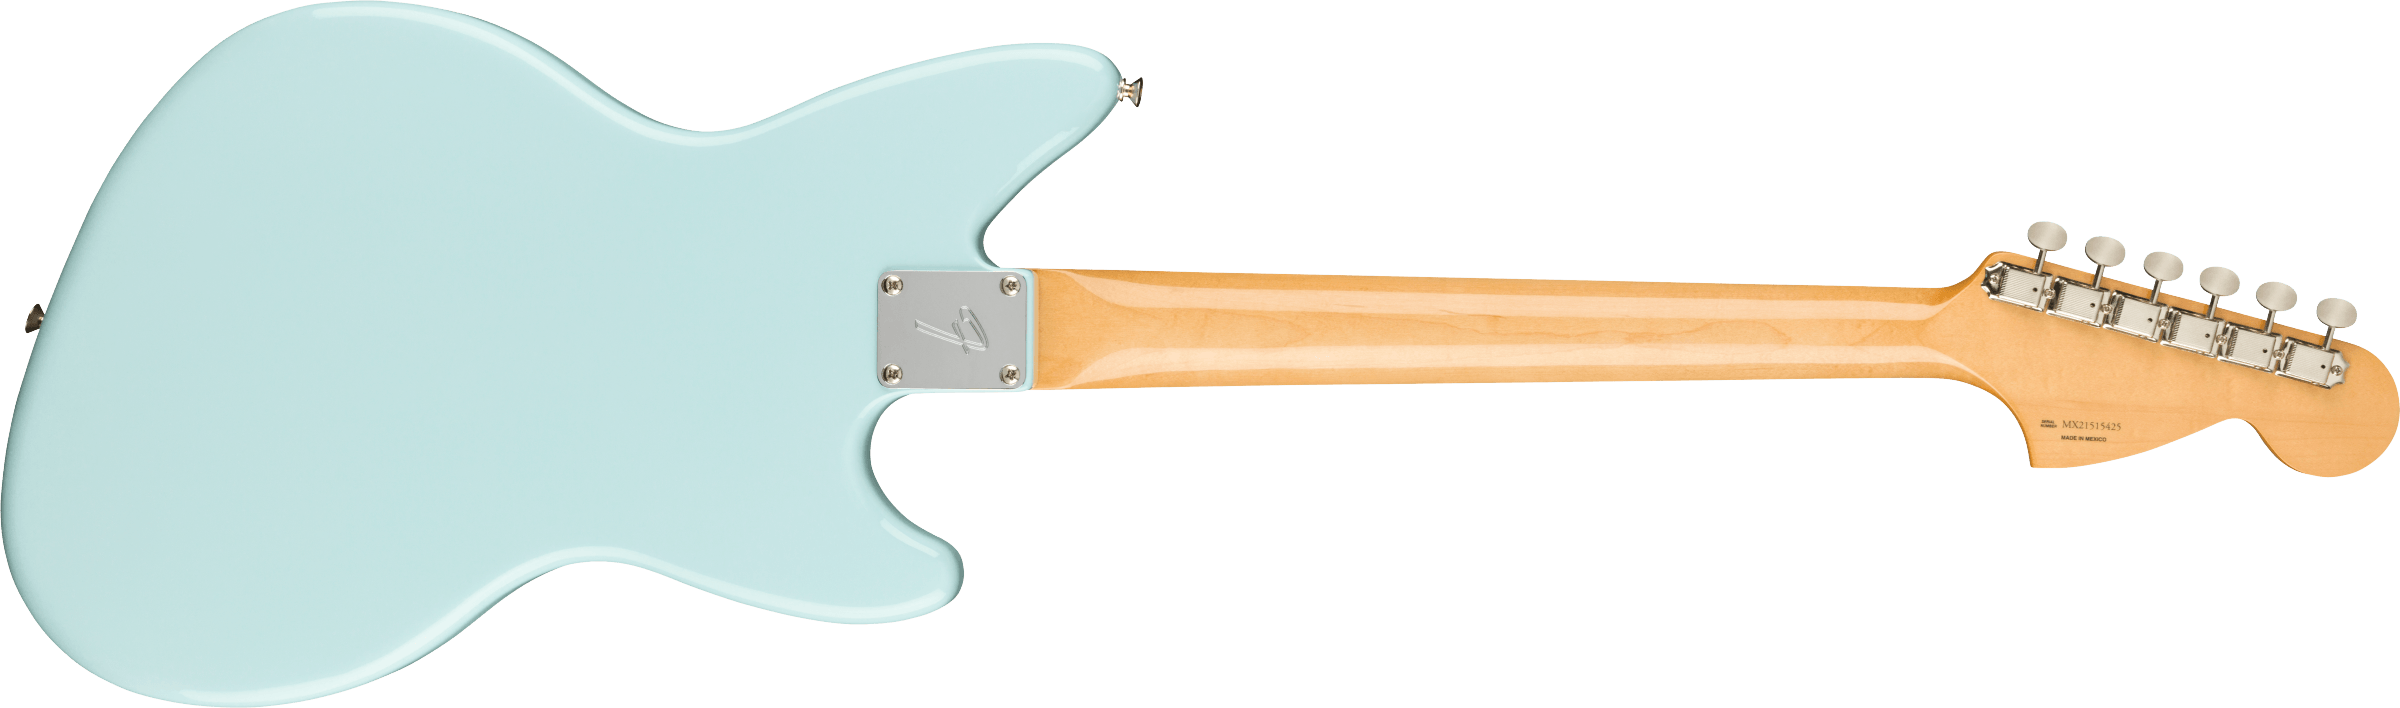 Fender Jag-stang Kurt Cobain Artist Gaucher Hs Trem Rw - Sonic Blue - Left-handed electric guitar - Variation 1